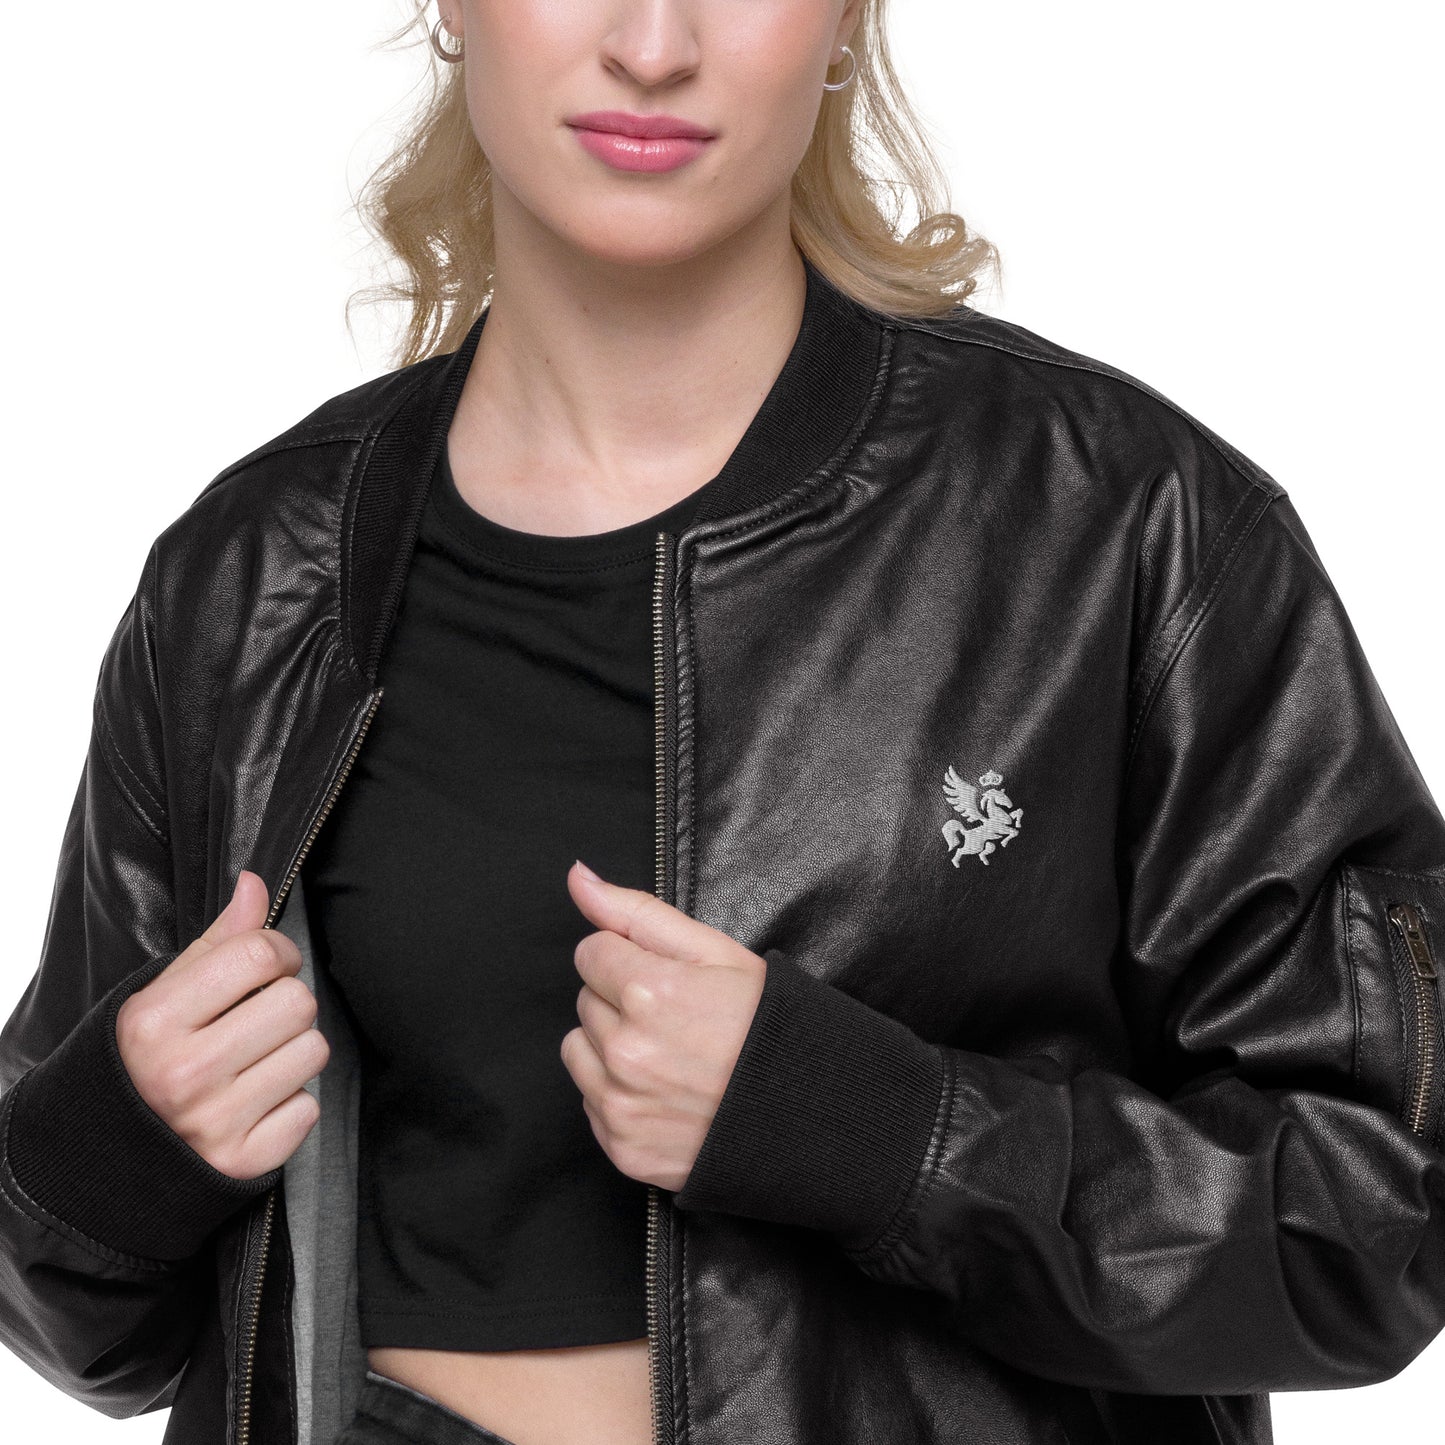 GRANDEUR® Women's Leather Bomber Jacket